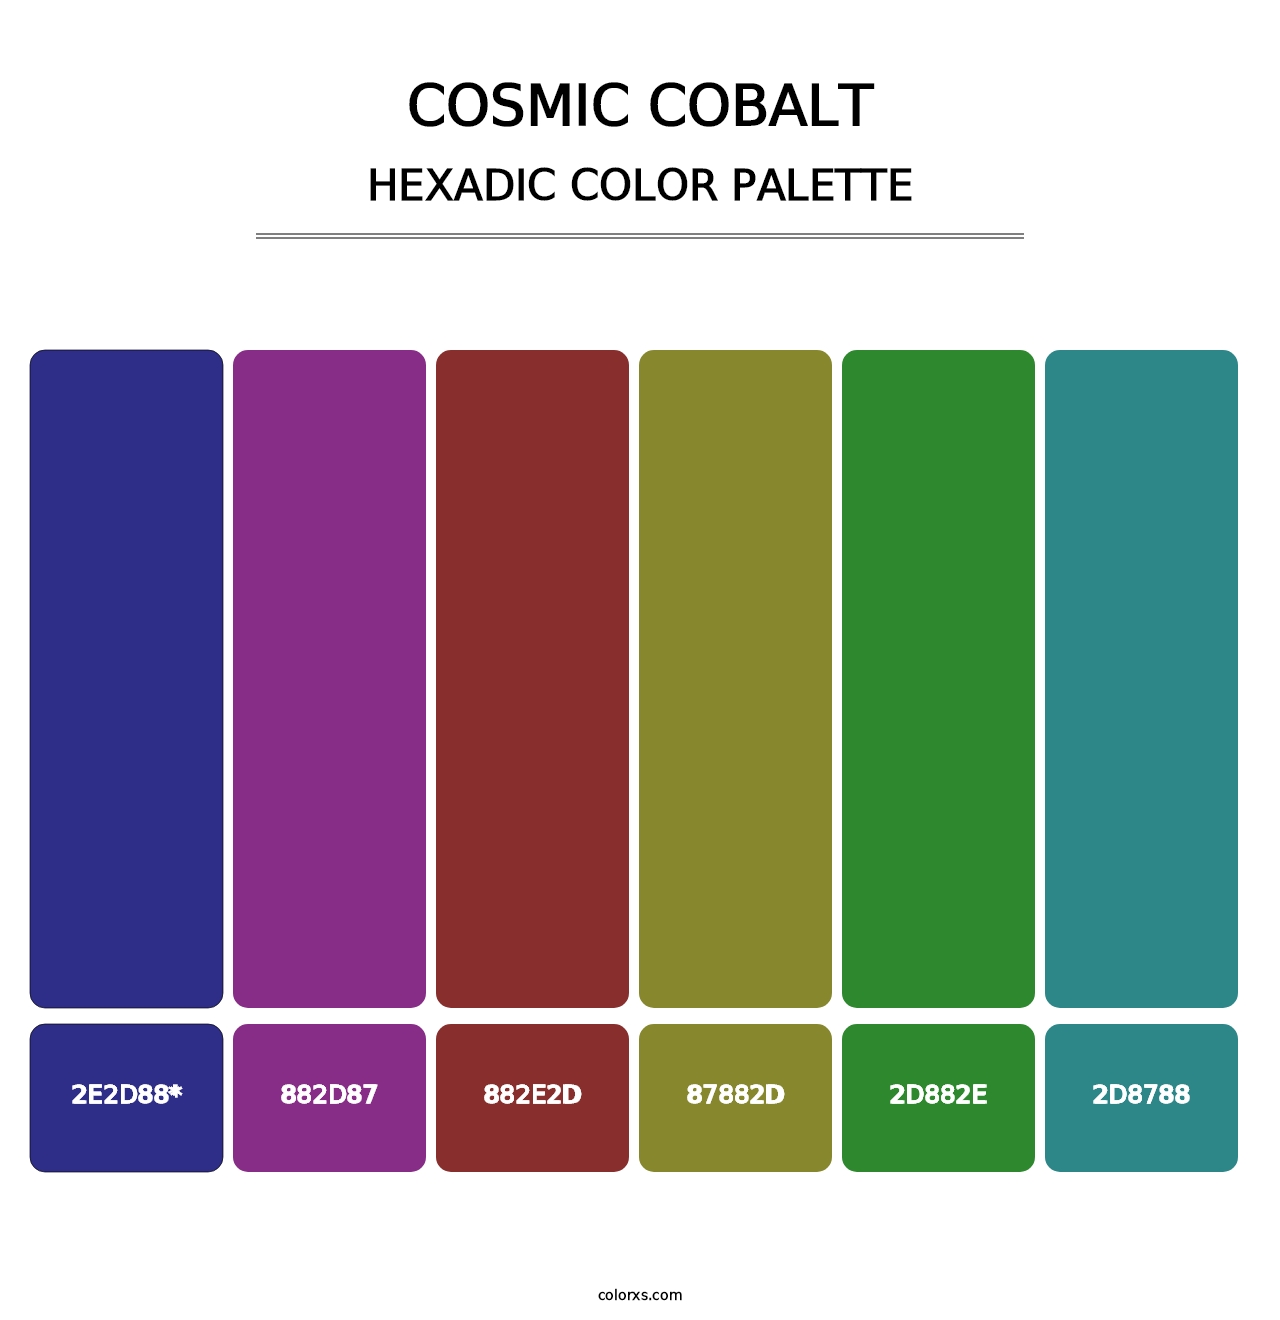 Cosmic Cobalt - Hexadic Color Palette